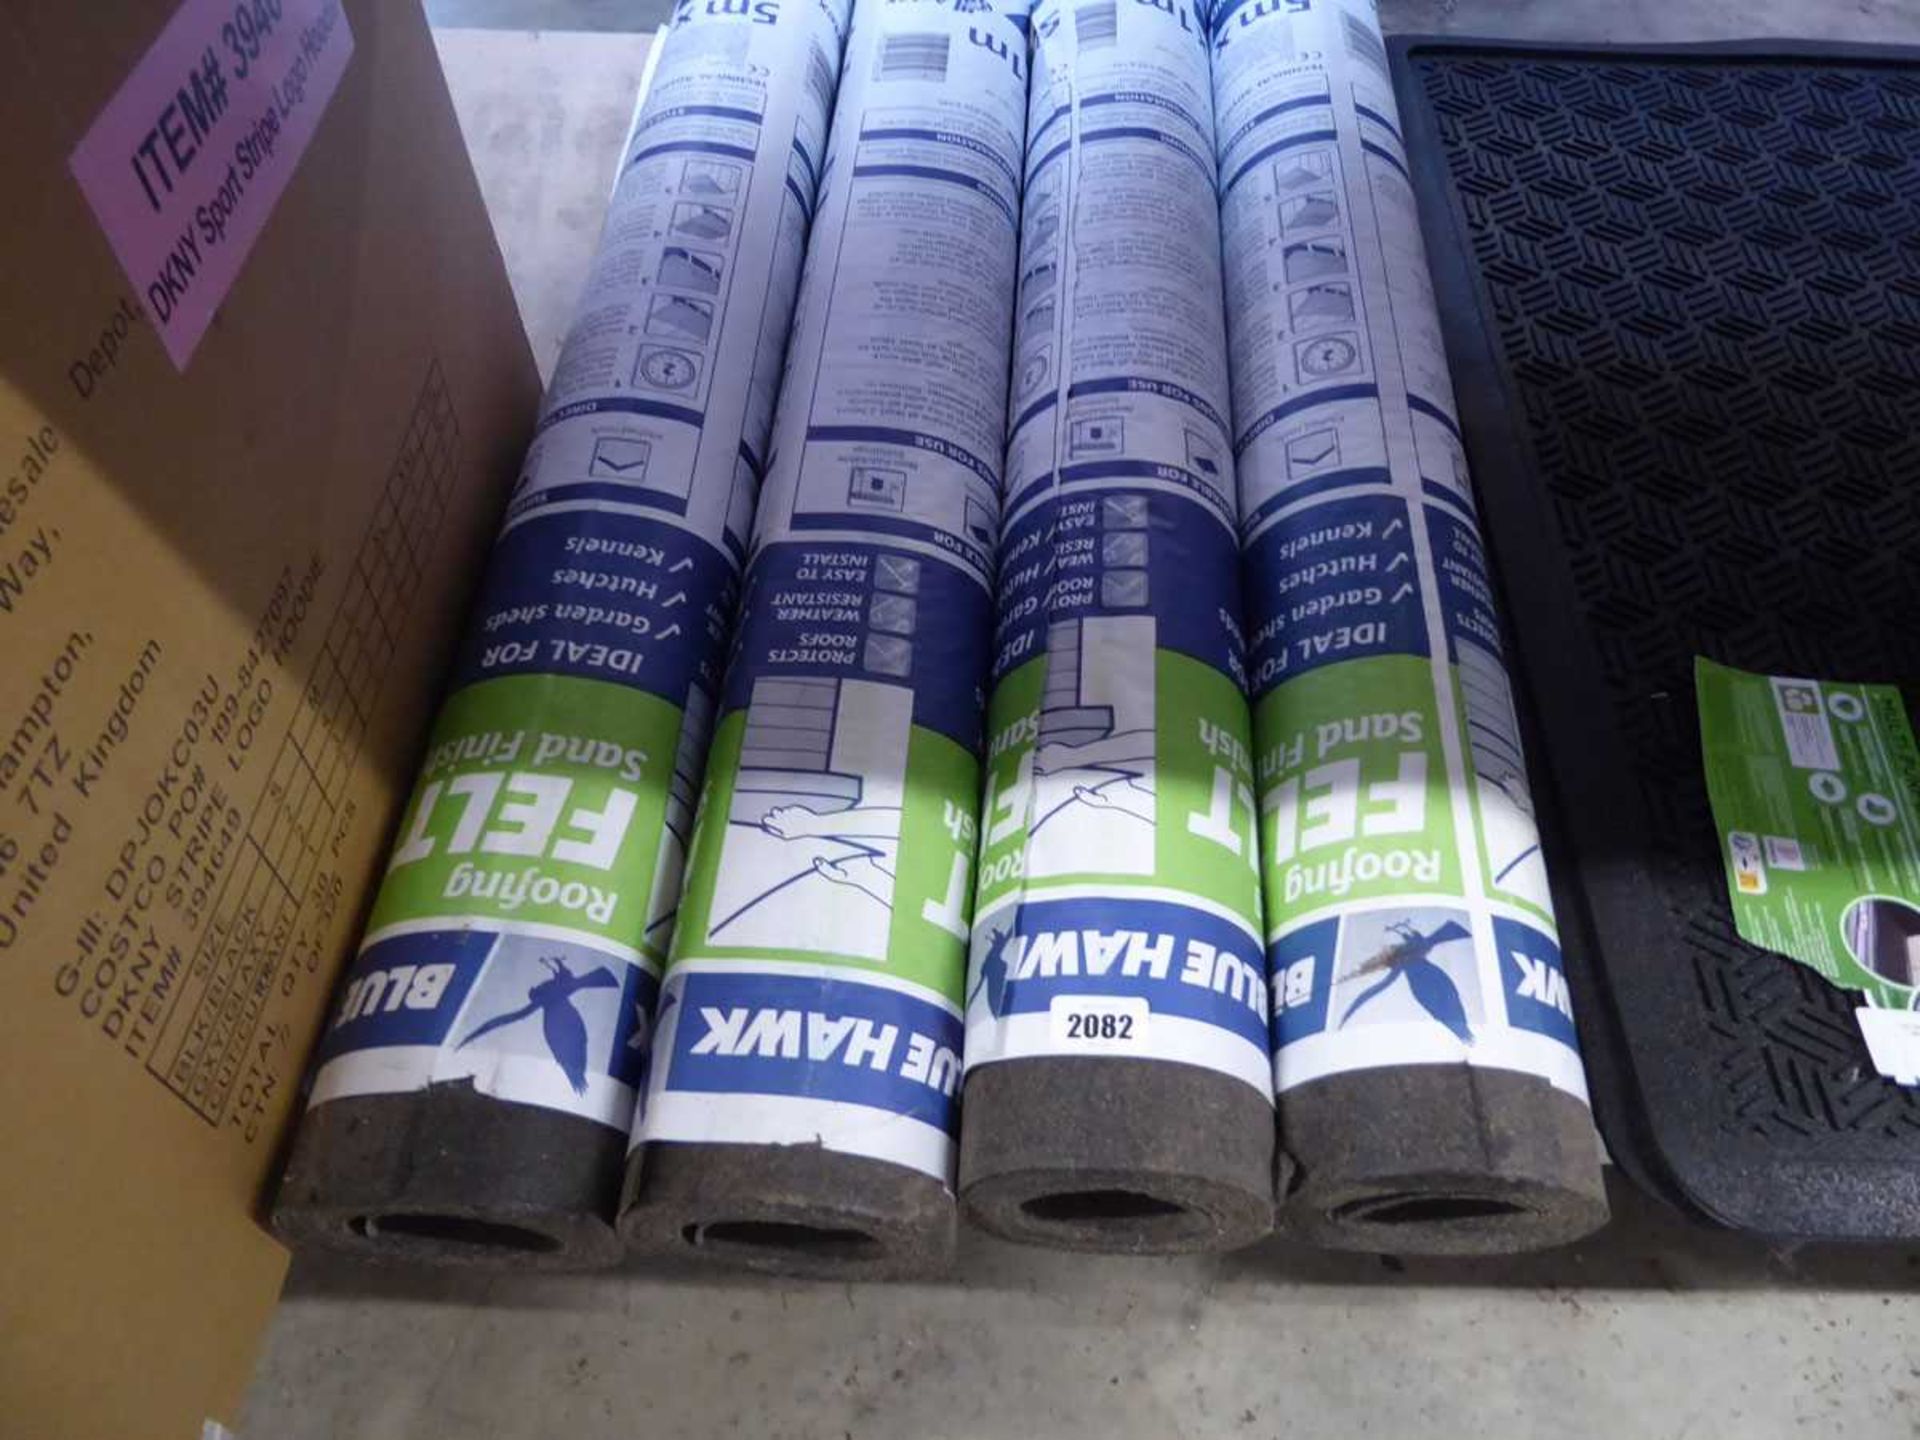 4 rolls of blue hawk 5m x 1m sand finish shed roofing felt